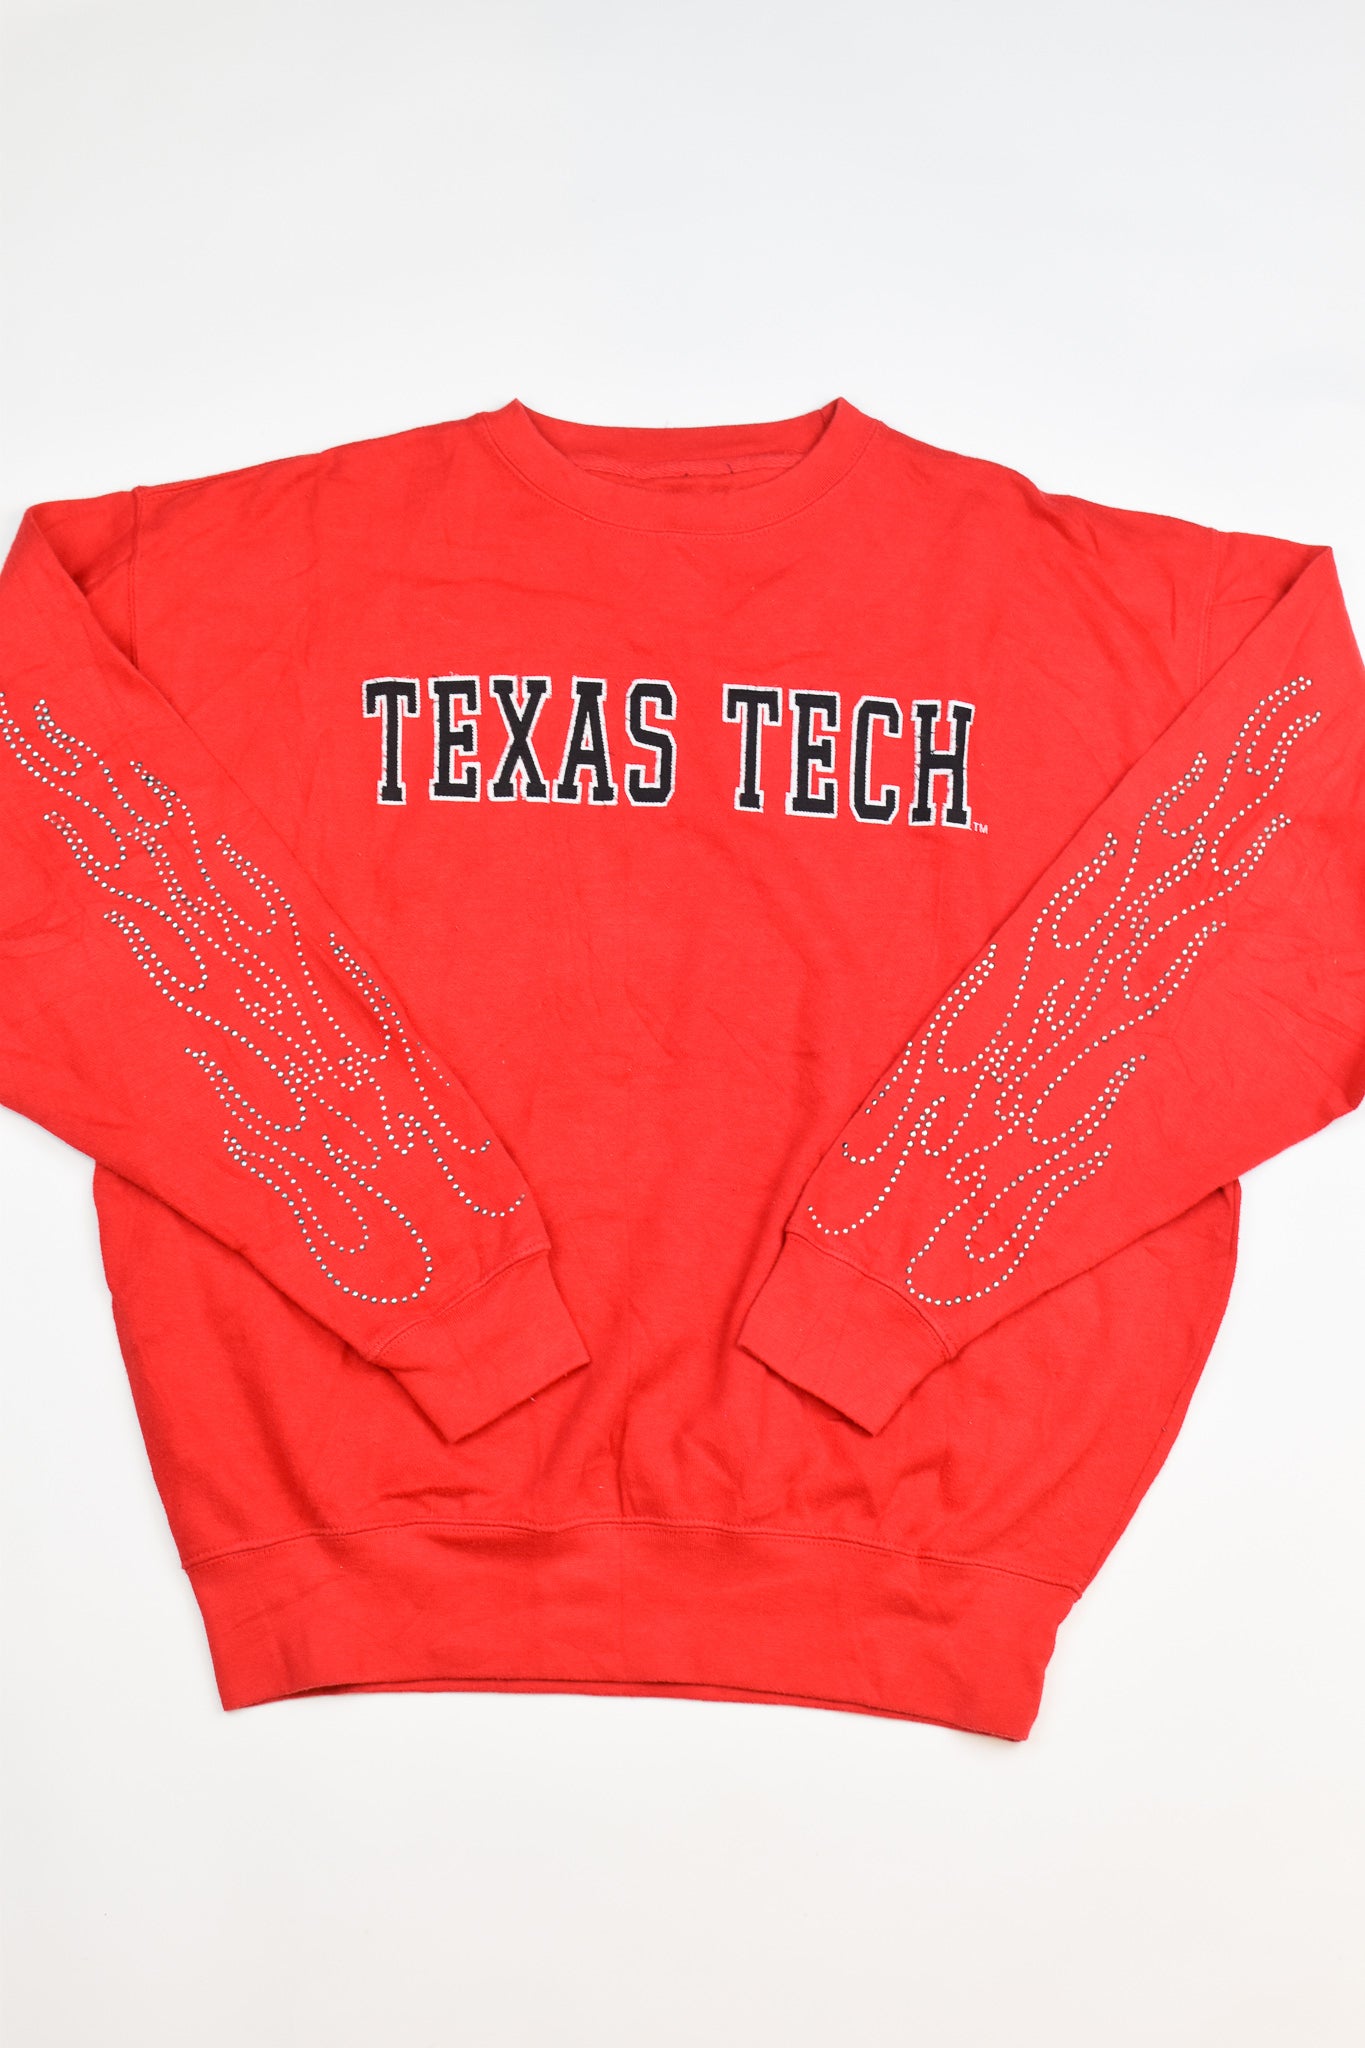 Upcycled Vintage Texas Tech Flame Sweatshirt